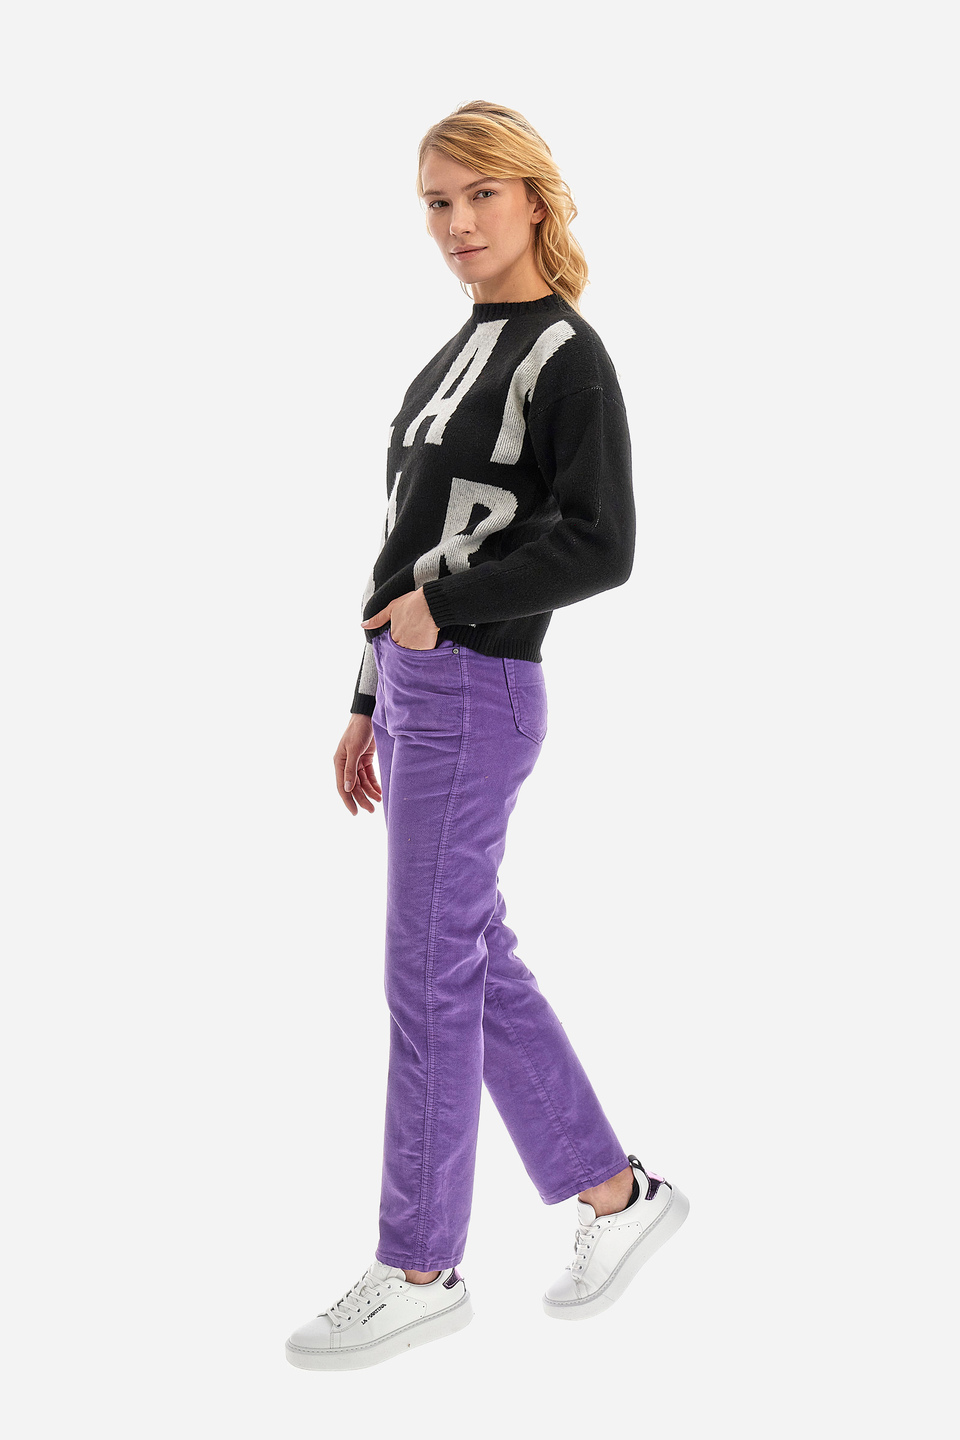 Damen -Pullover regular fit - Wilkins | La Martina - Official Online Shop